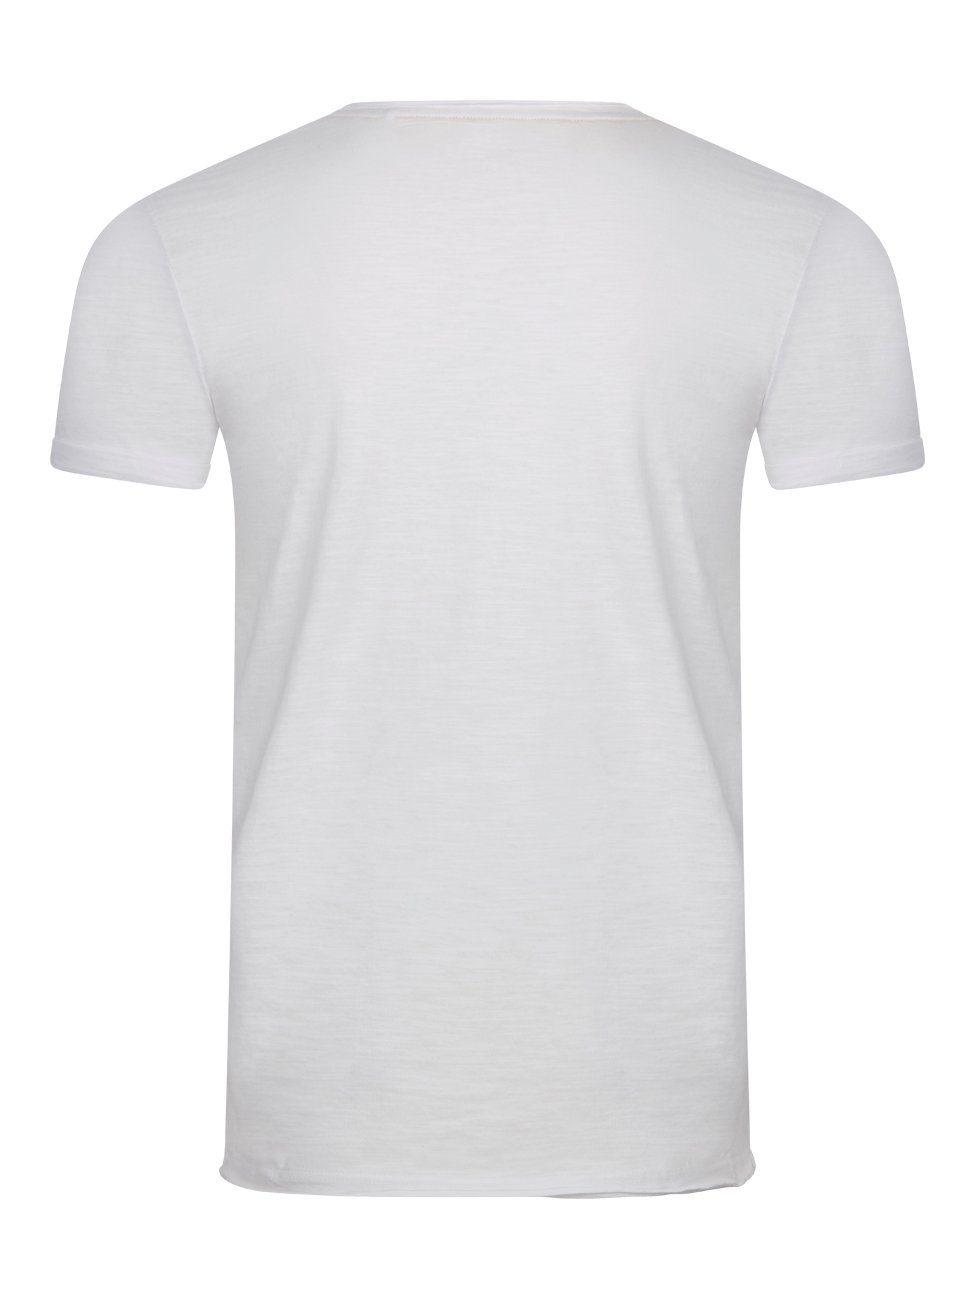 Basic (3-tlg) T-Shirt White Baumwolle riverso mit Rundhalsausschnitt Shirt Herren Fit Kurzarm aus Tee RIVLenny Regular Shirt 100%